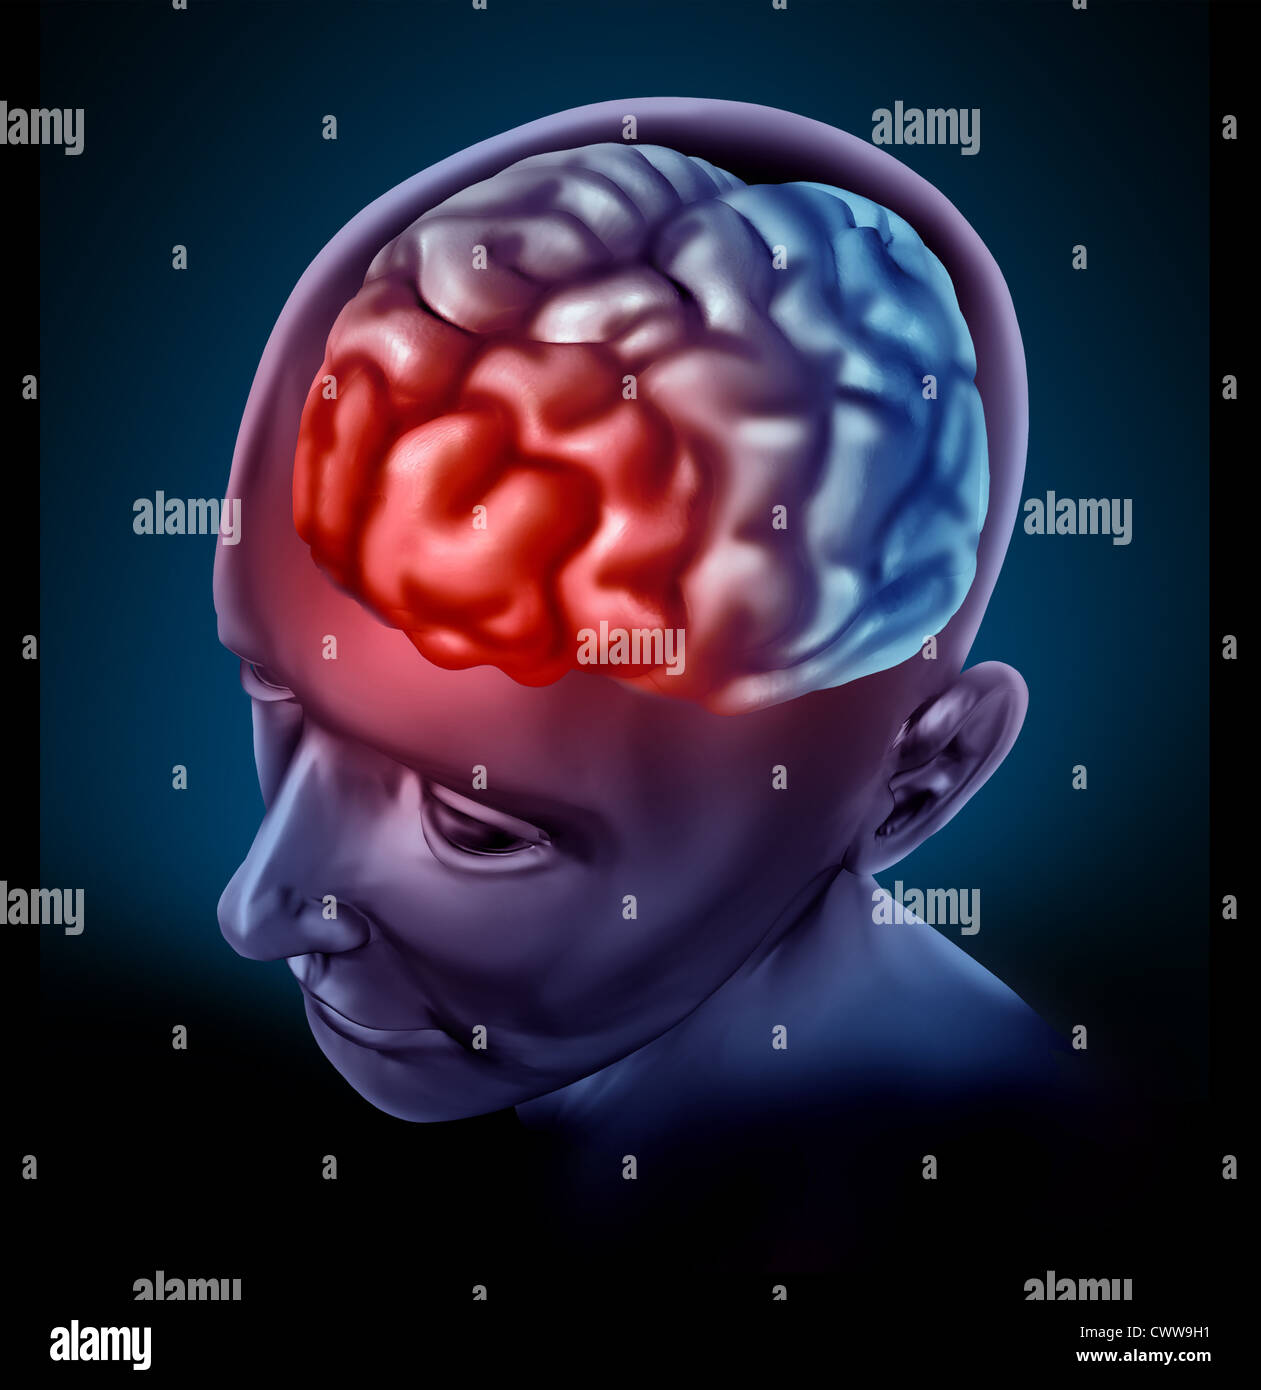 Migrain headache pain represented by a human brain with a ...